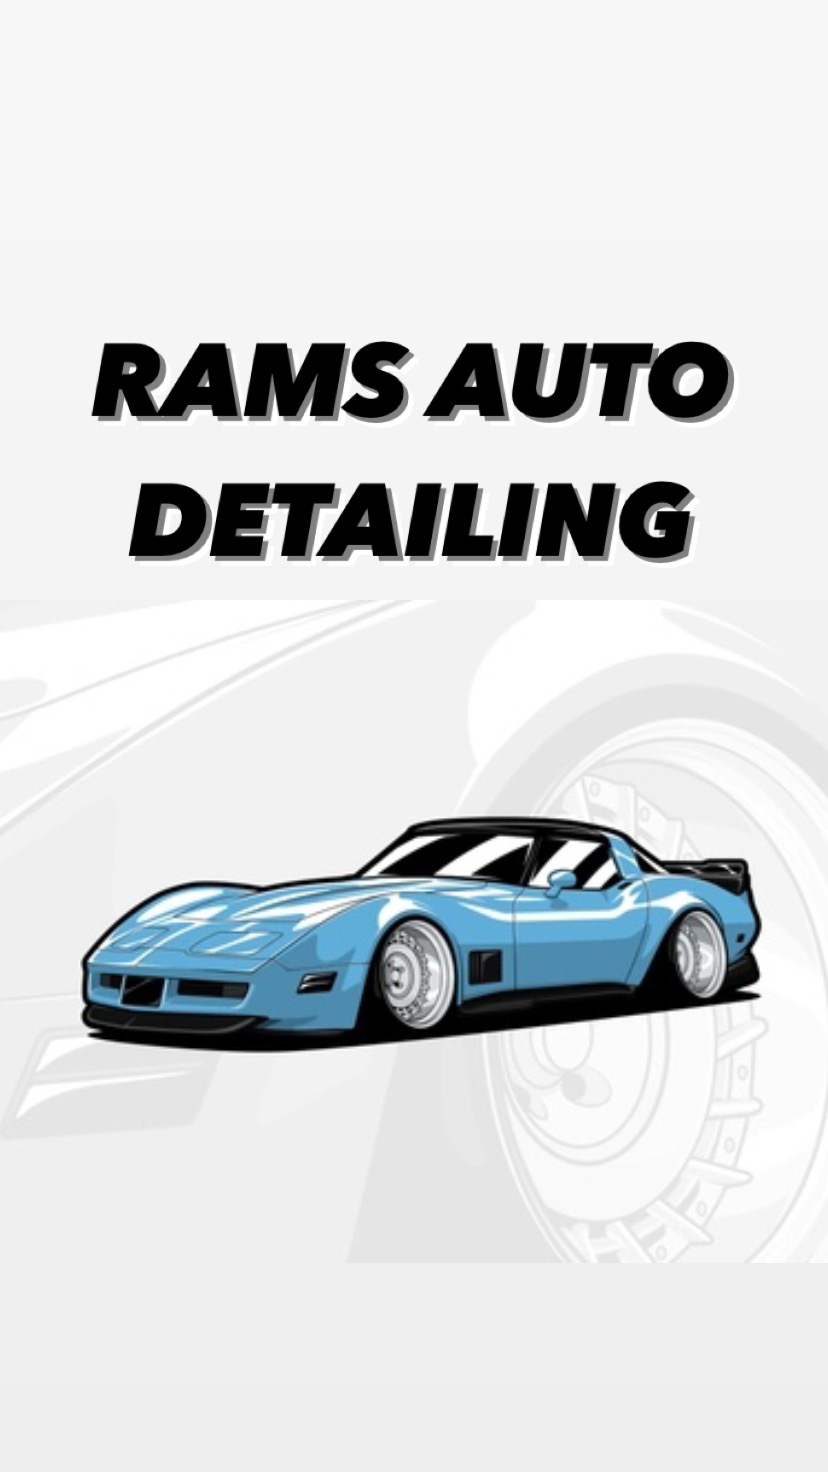 Ram’s Auto Detailing